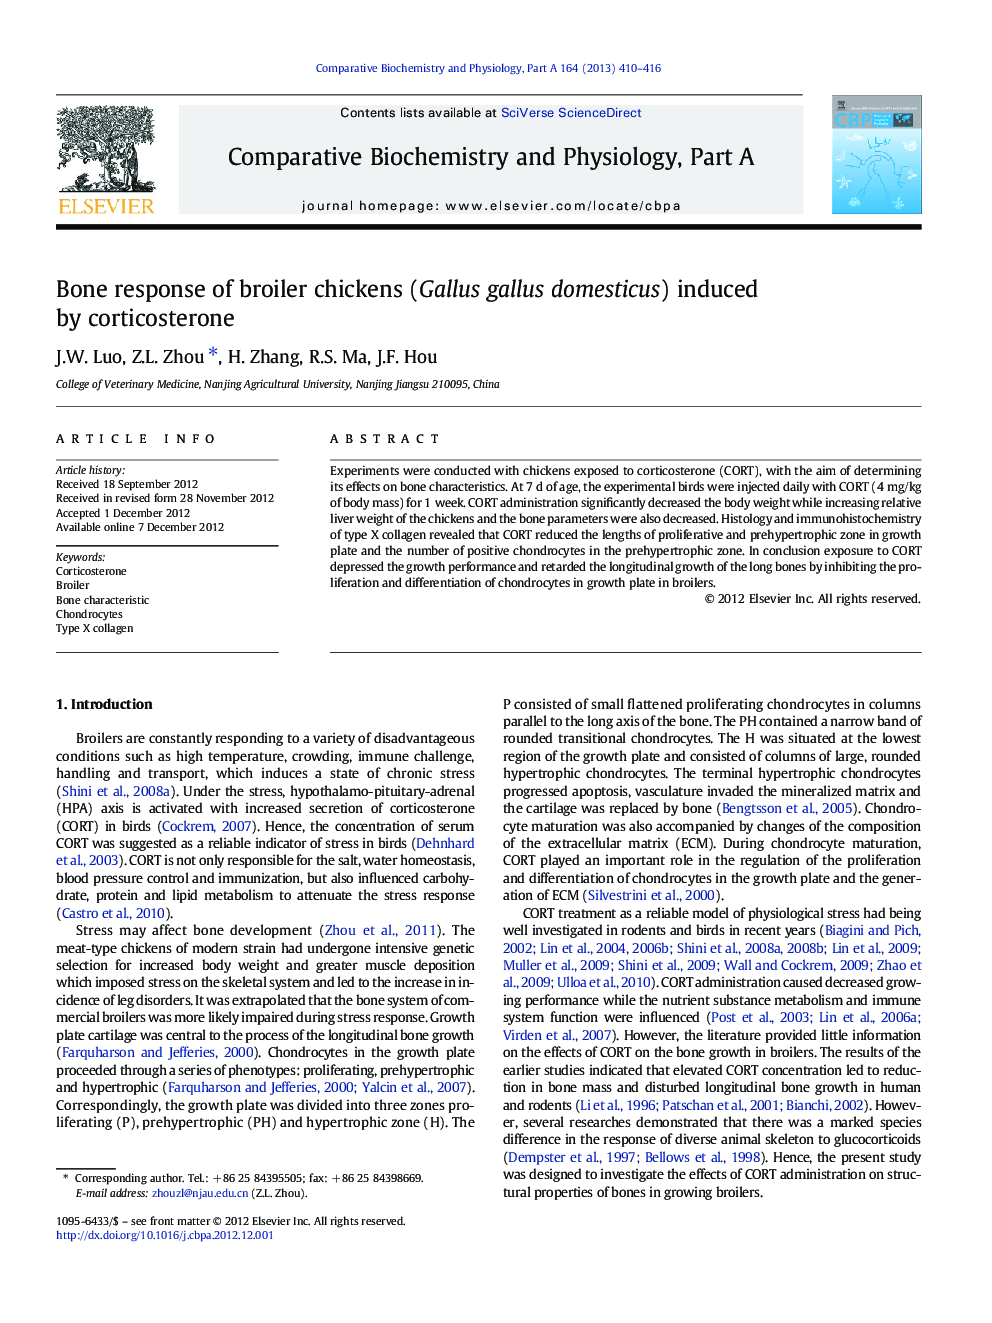 Bone response of broiler chickens (Gallus gallus domesticus) induced by corticosterone